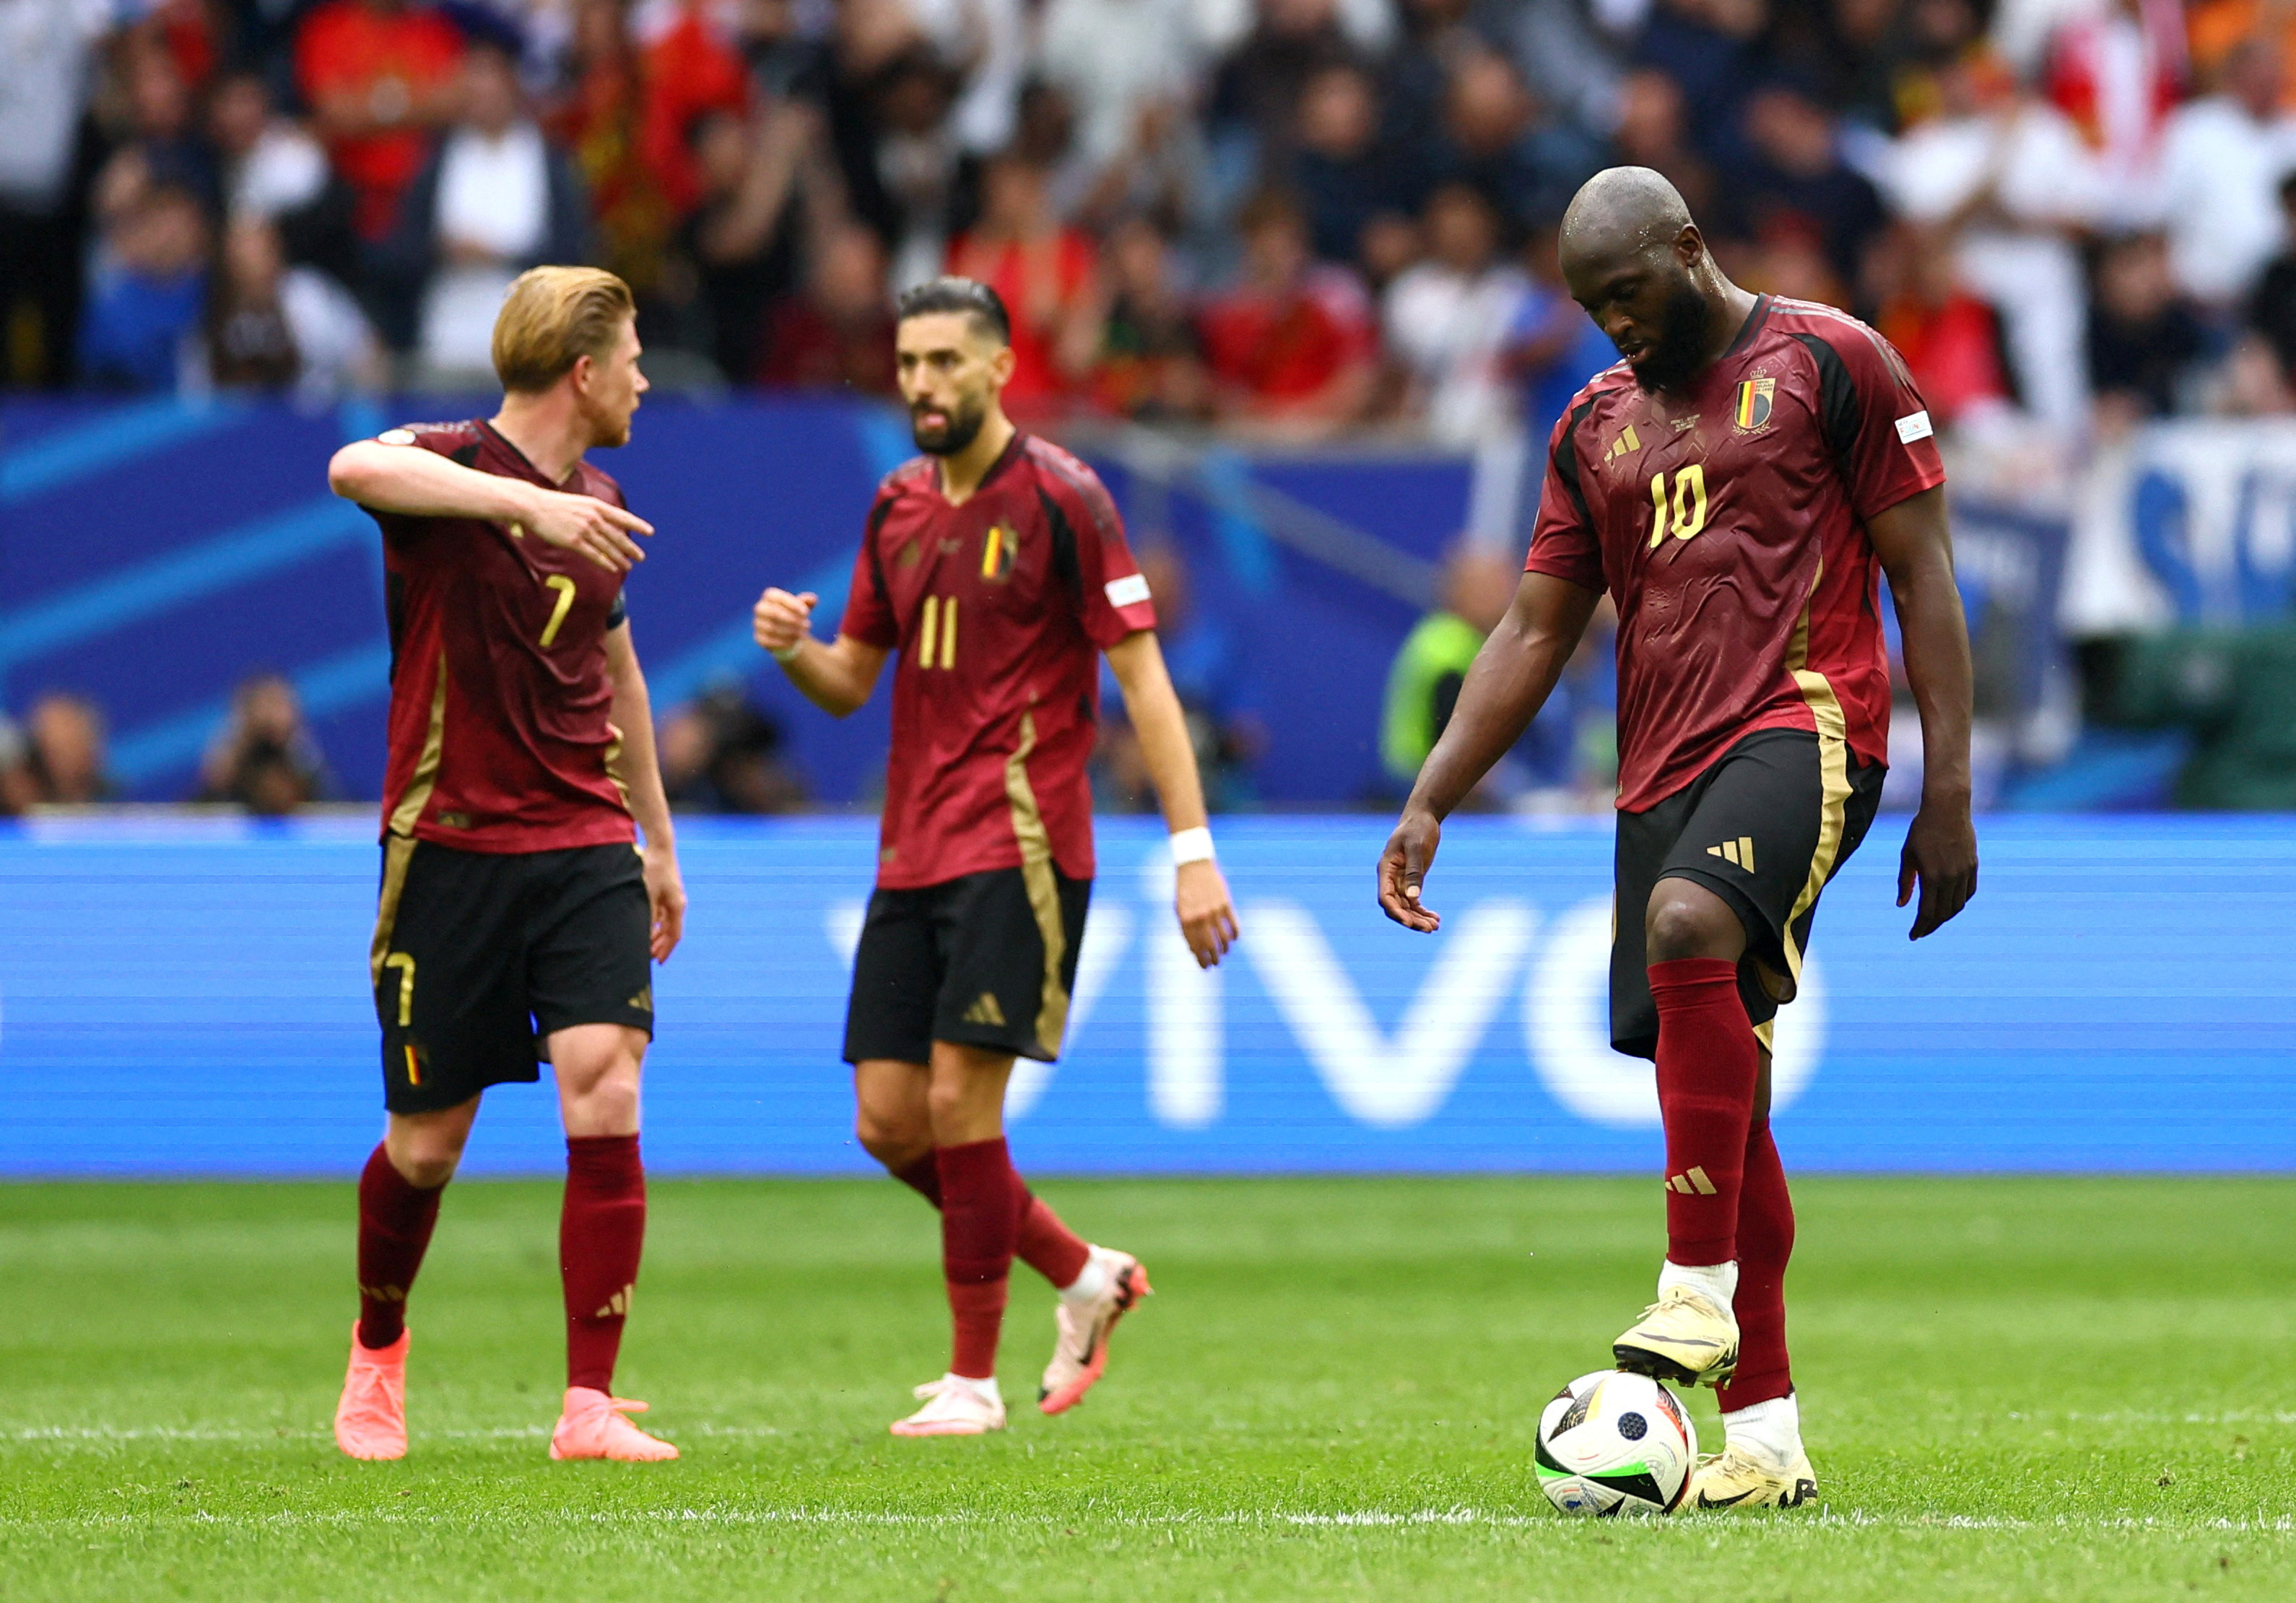 Kolo Muani late goal gives France 1-0 win over tame Belgium